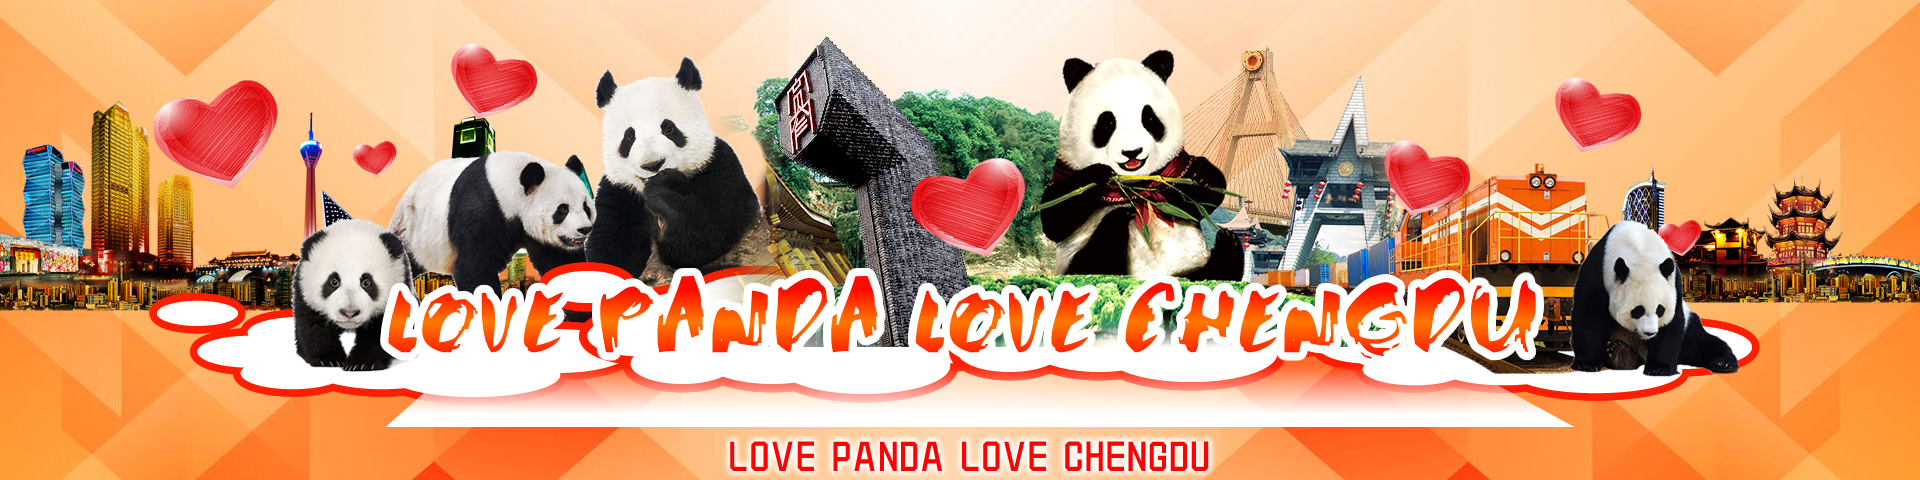 Love Panda Love Chengdu_fororder_头图